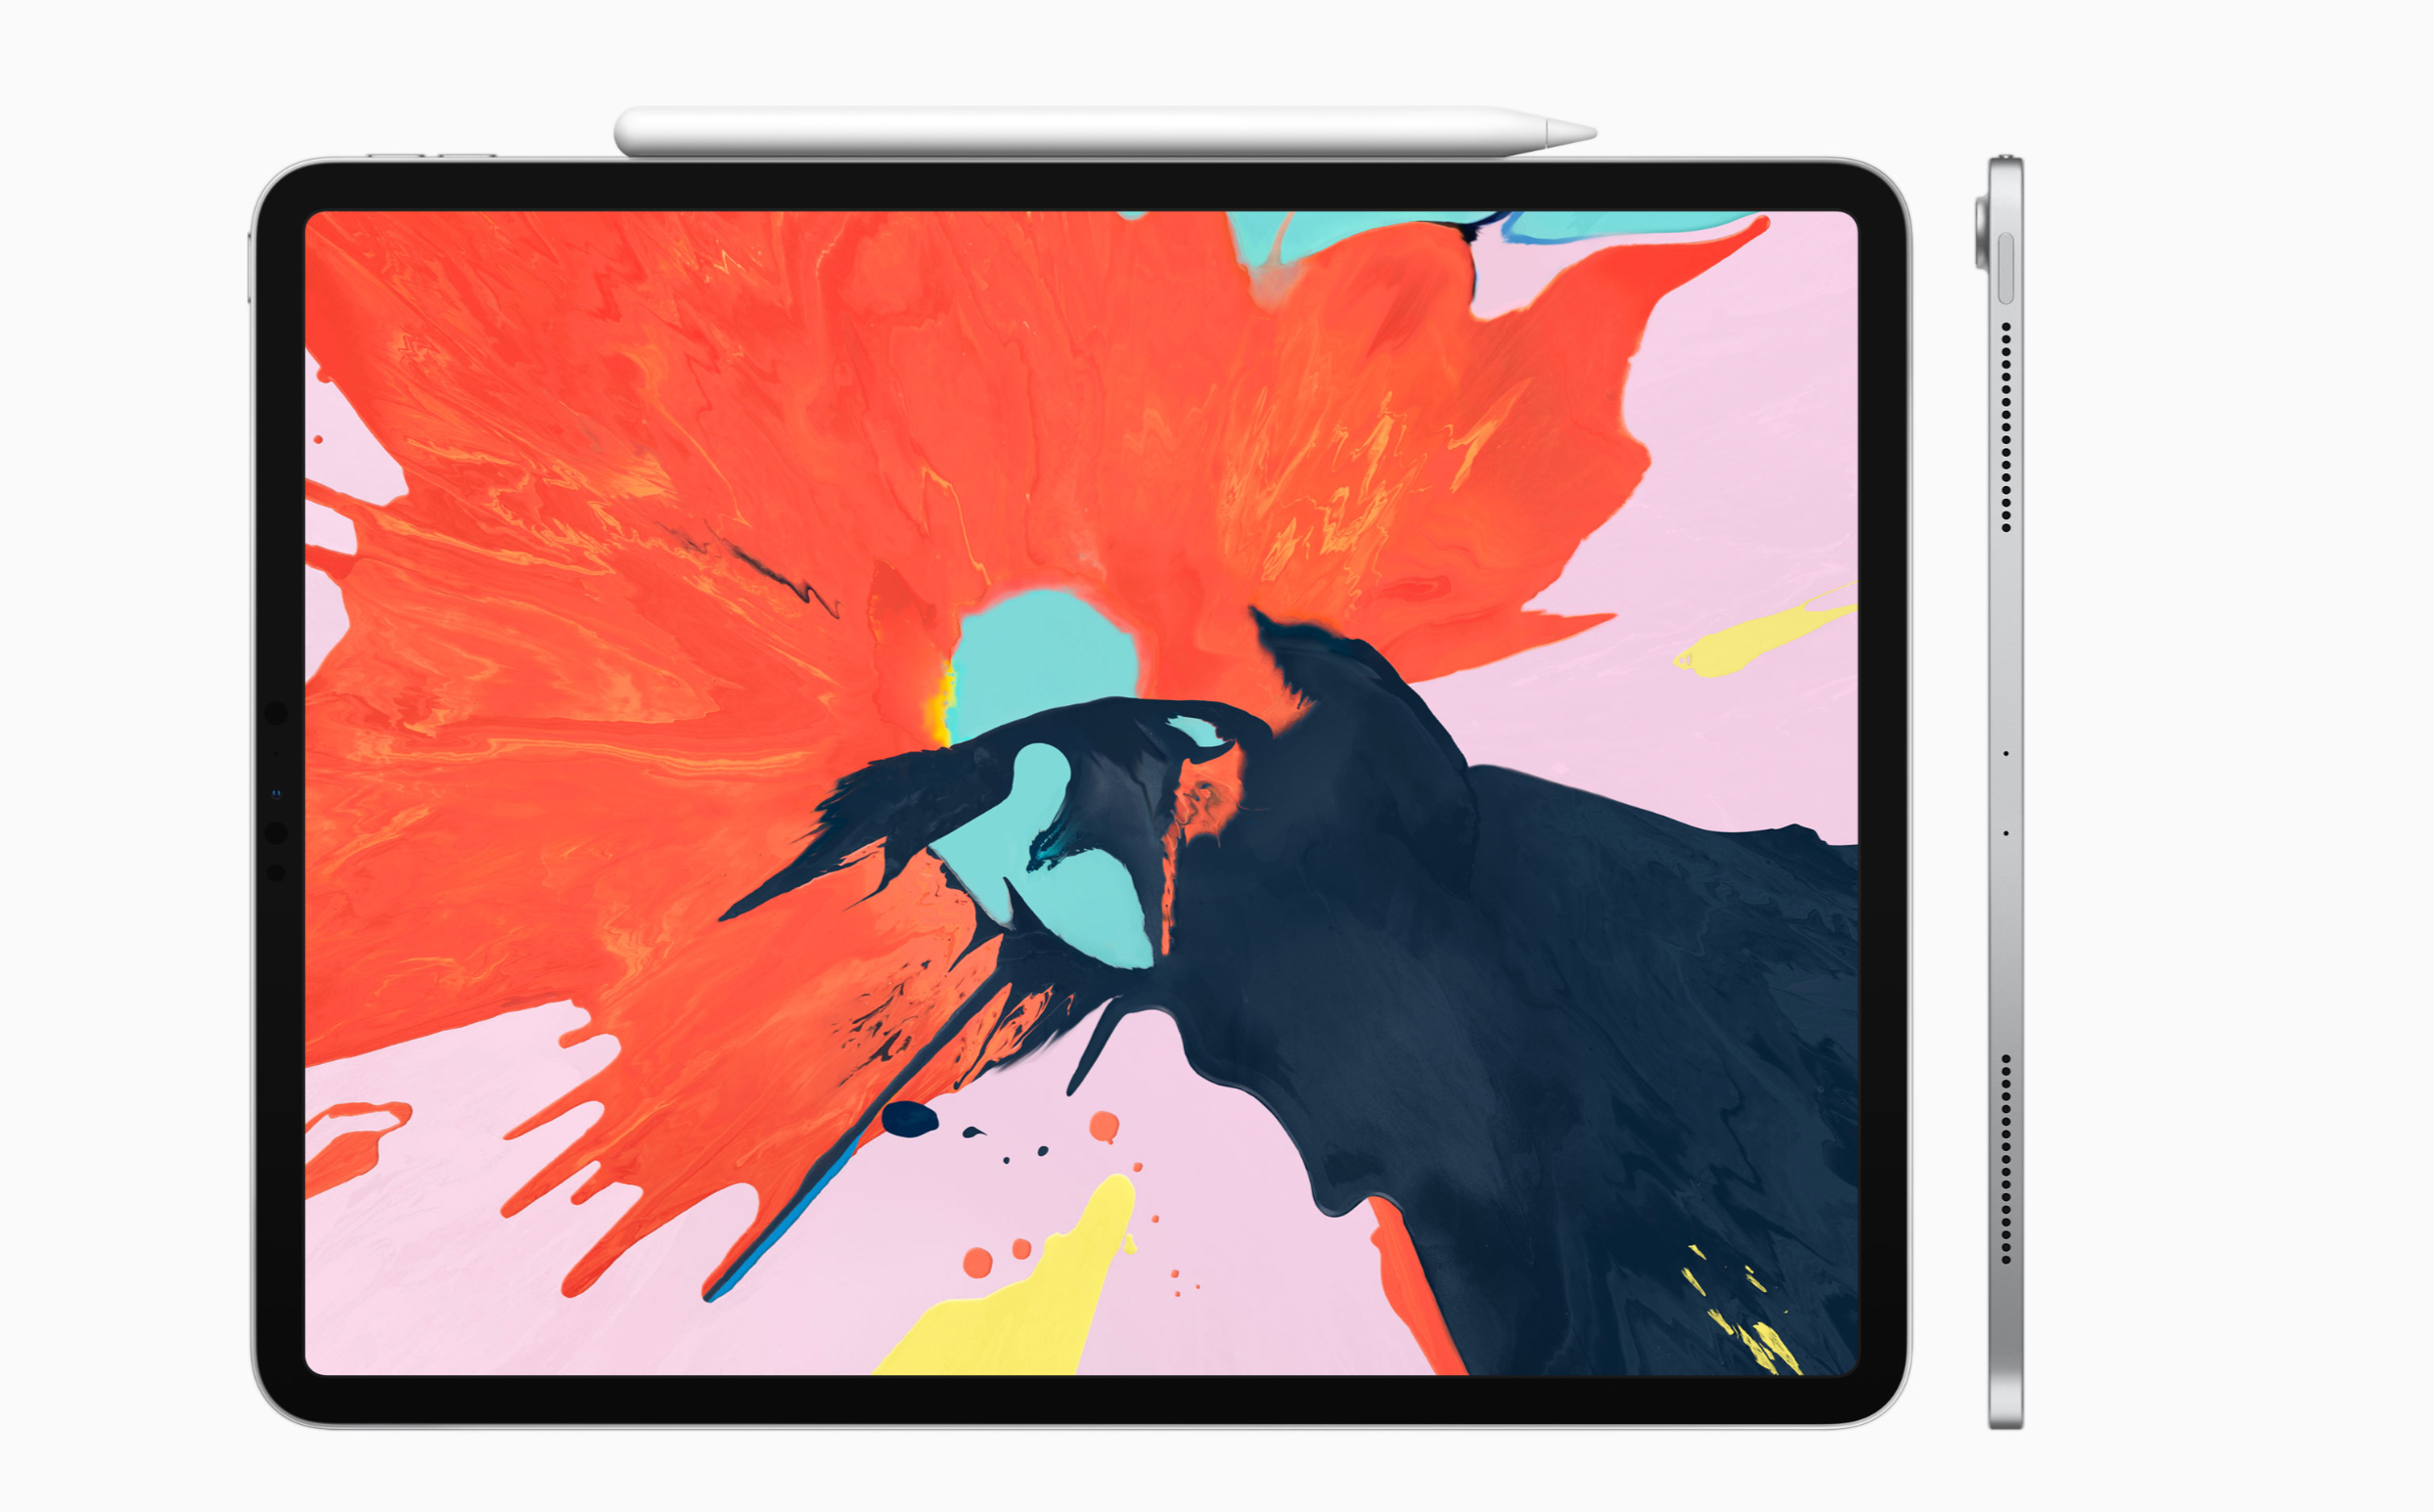 Should you upgrade to the iPad (2018) or iPad mini 4?